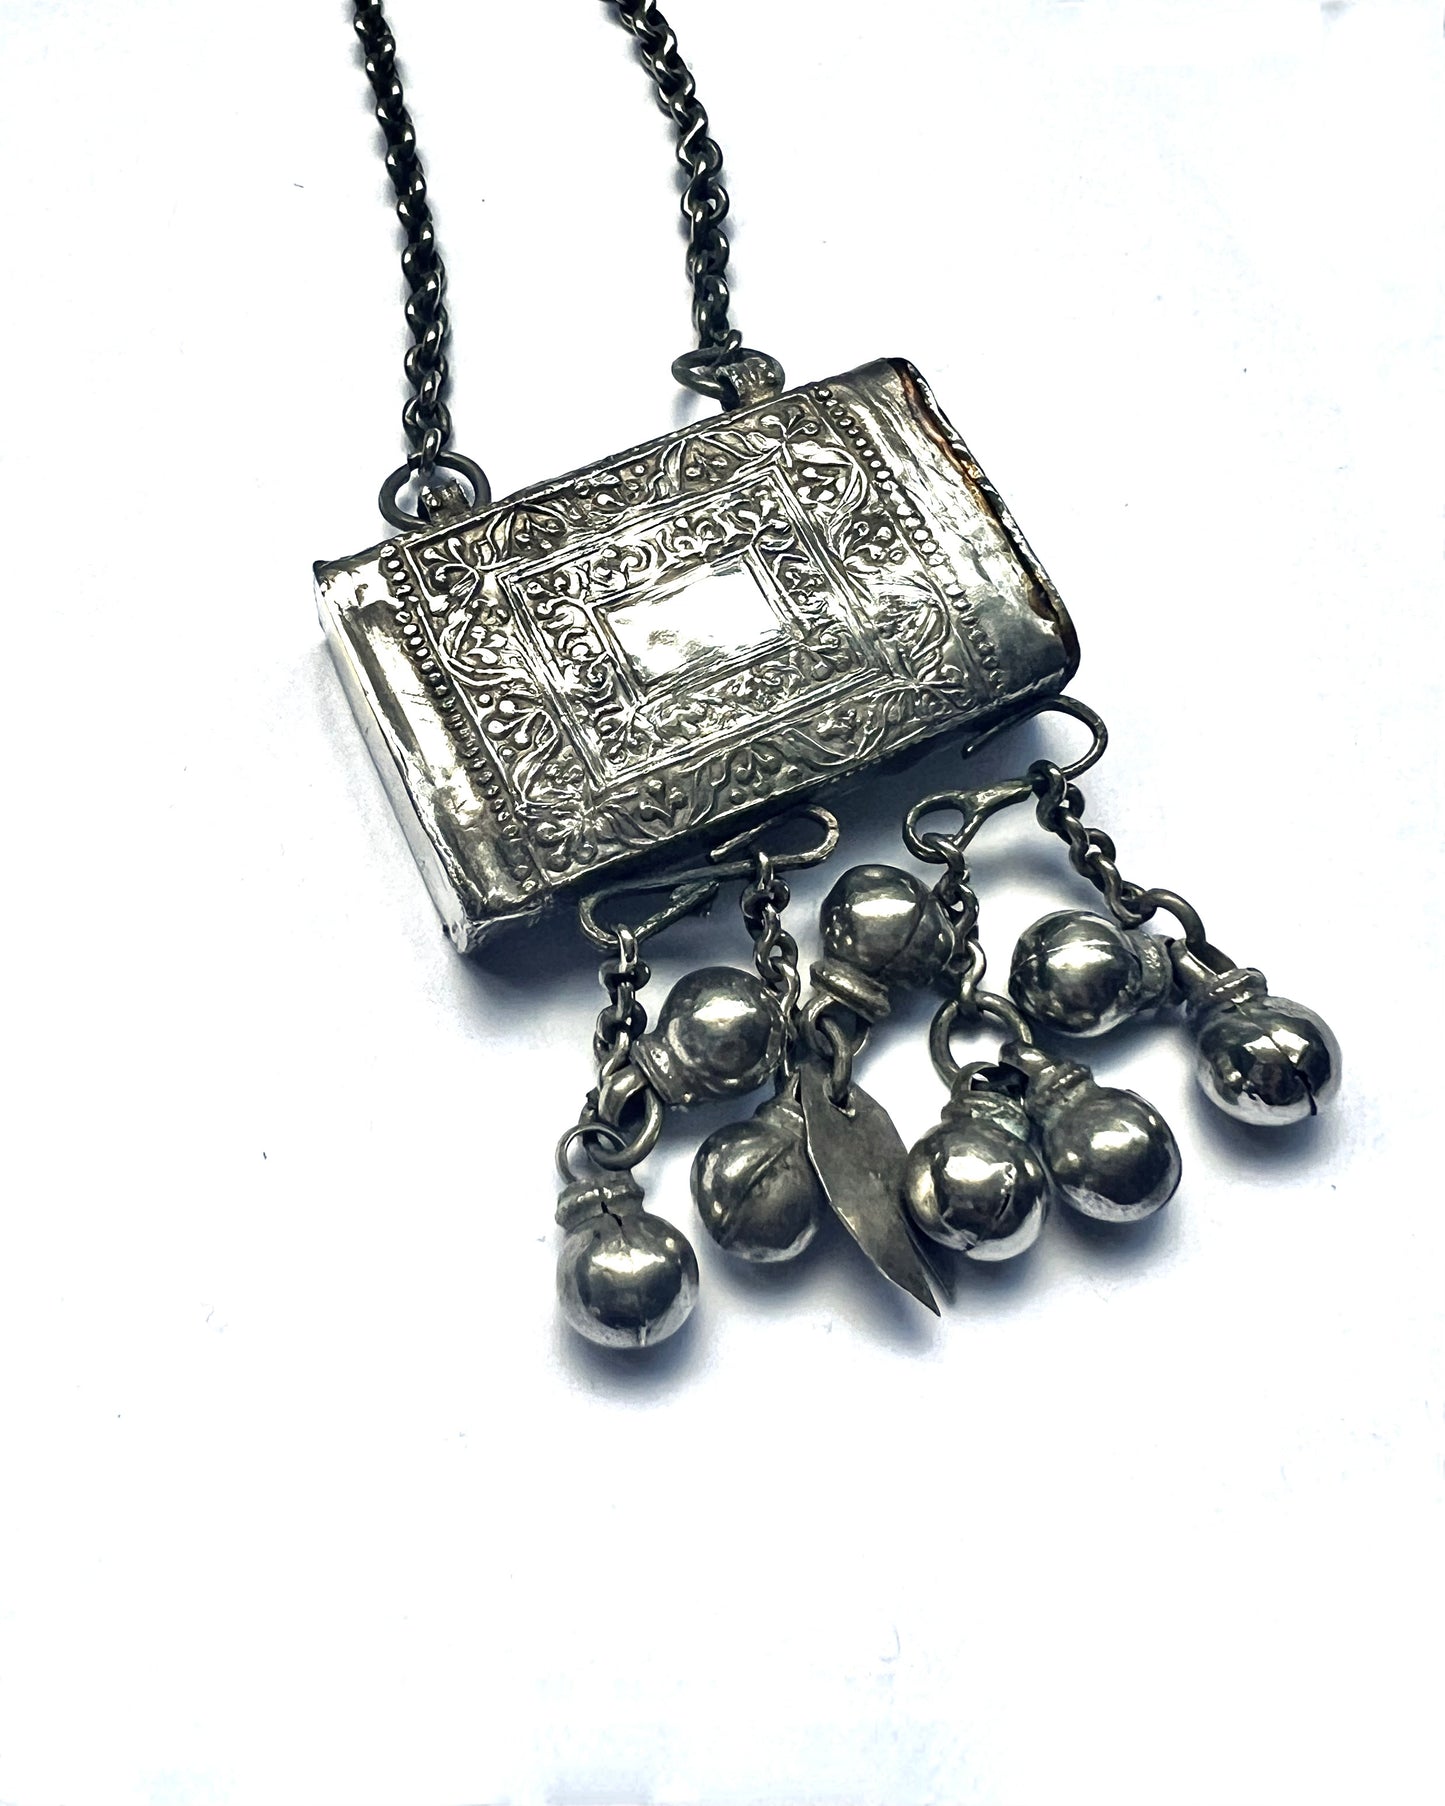 Lovely antique Rajasthani silver amulet/ prayer box necklace, circa 19th century